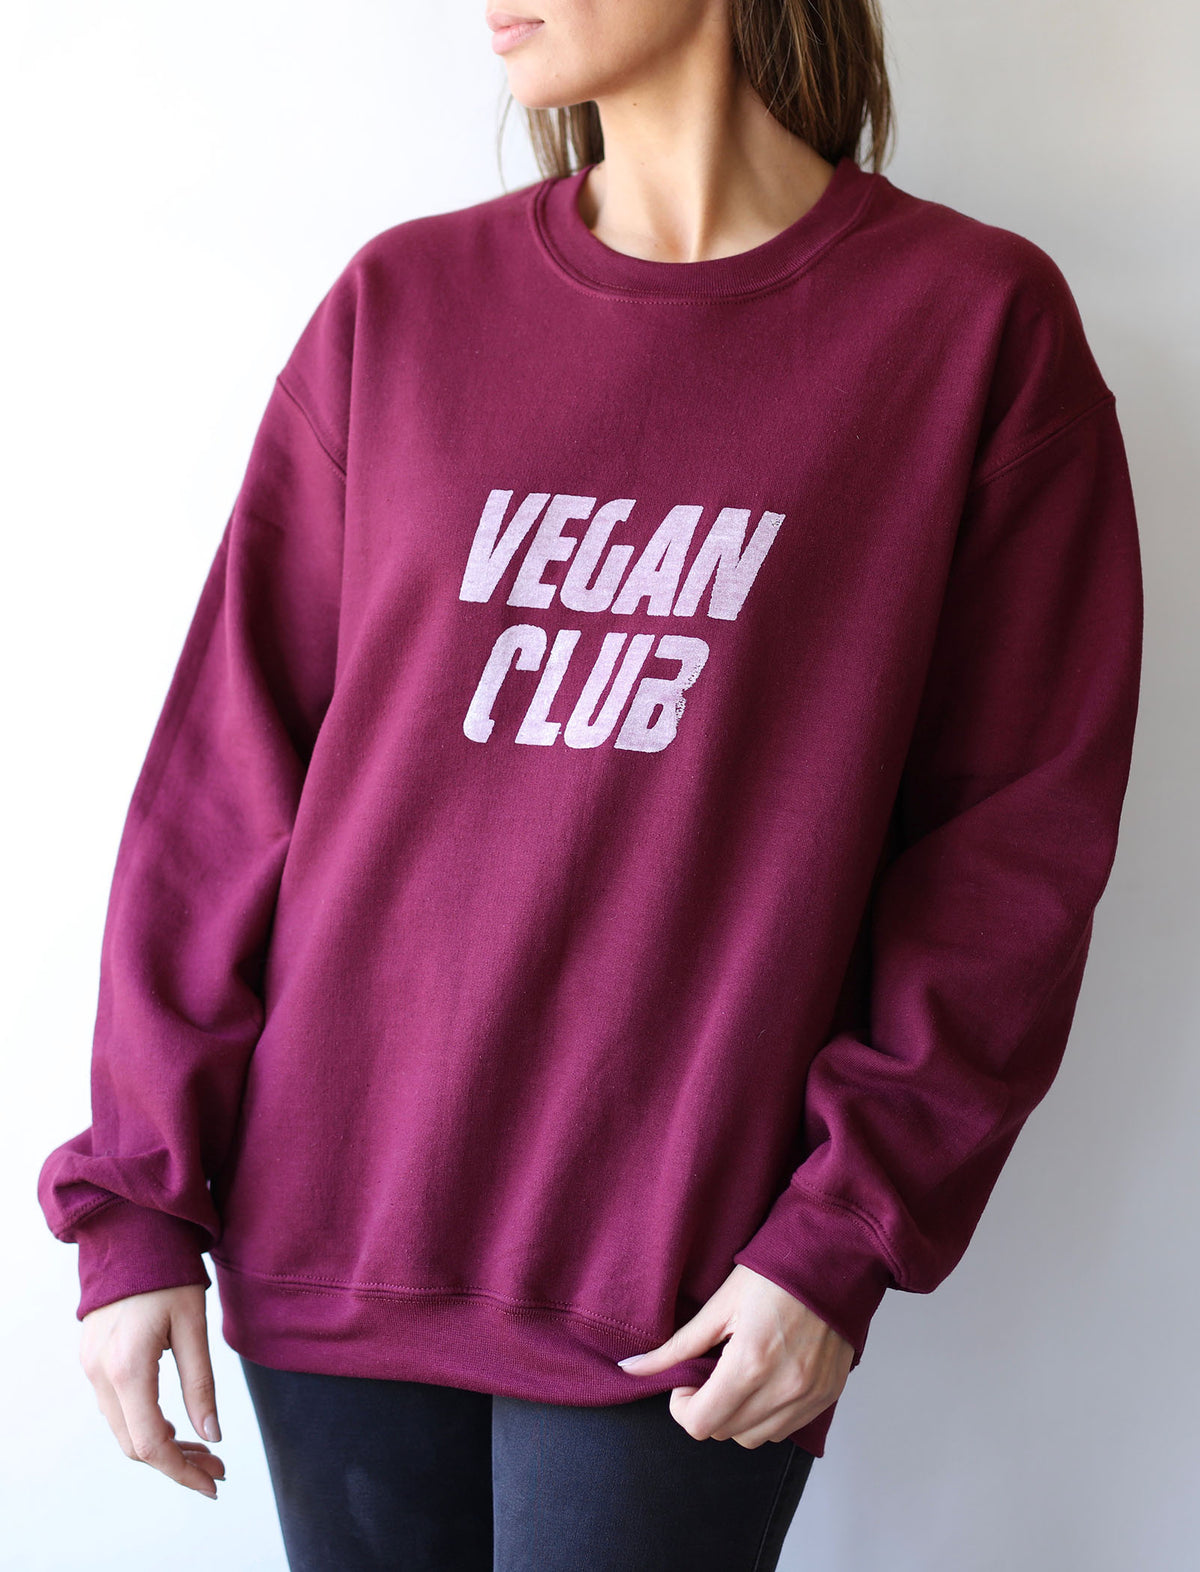 Vegan Club Unisex Sweatshirt